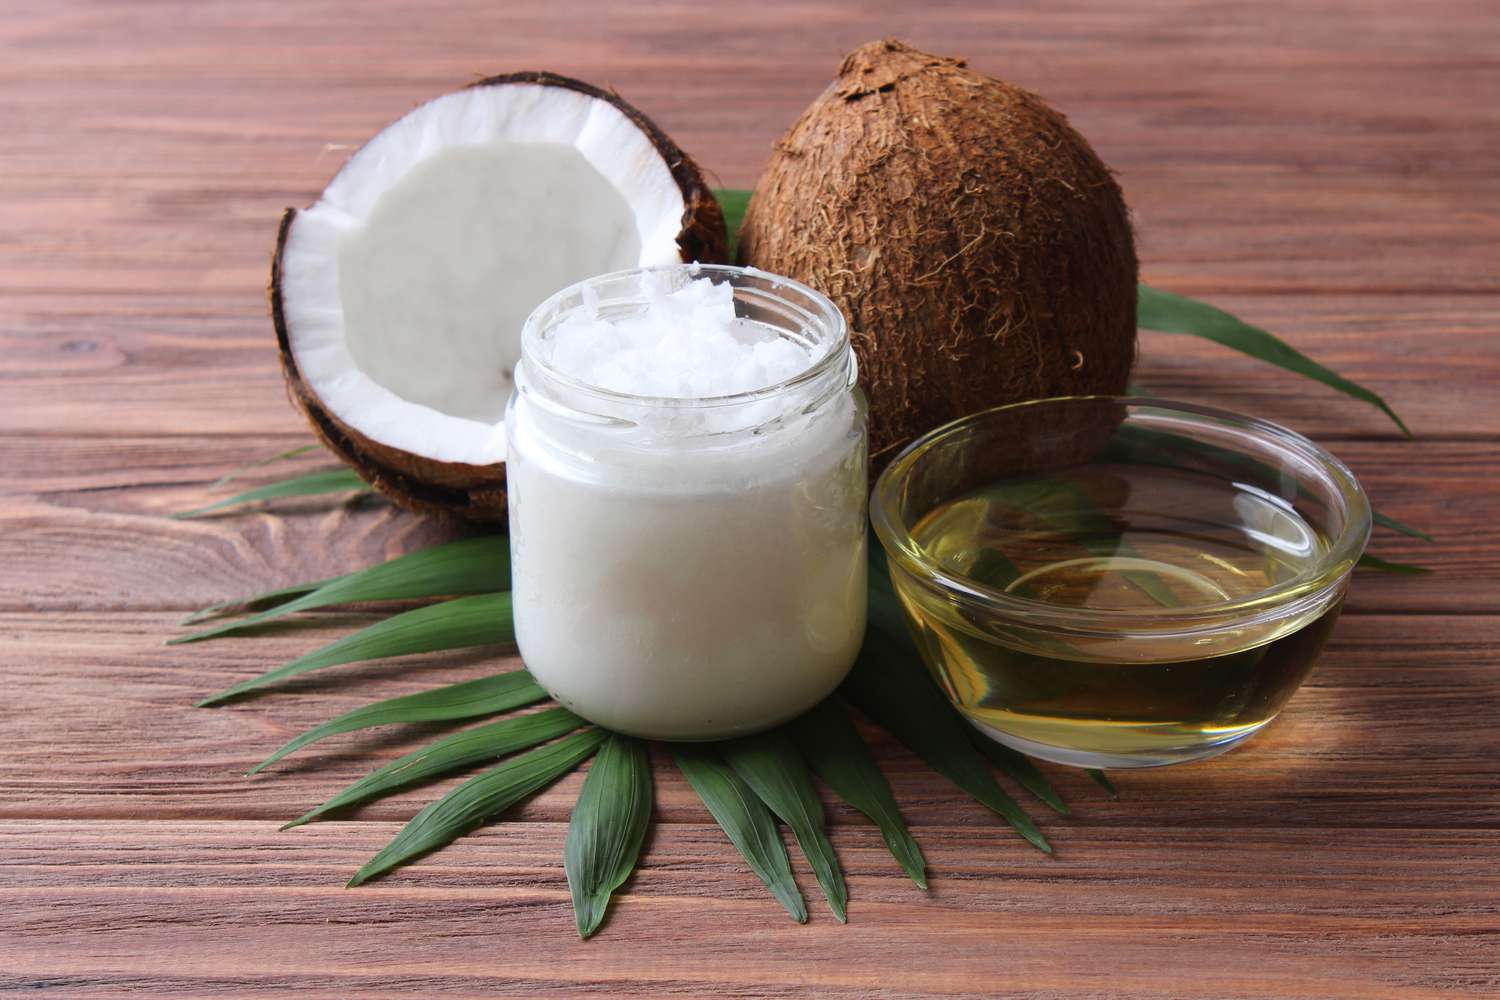 The Coconut Oil Method